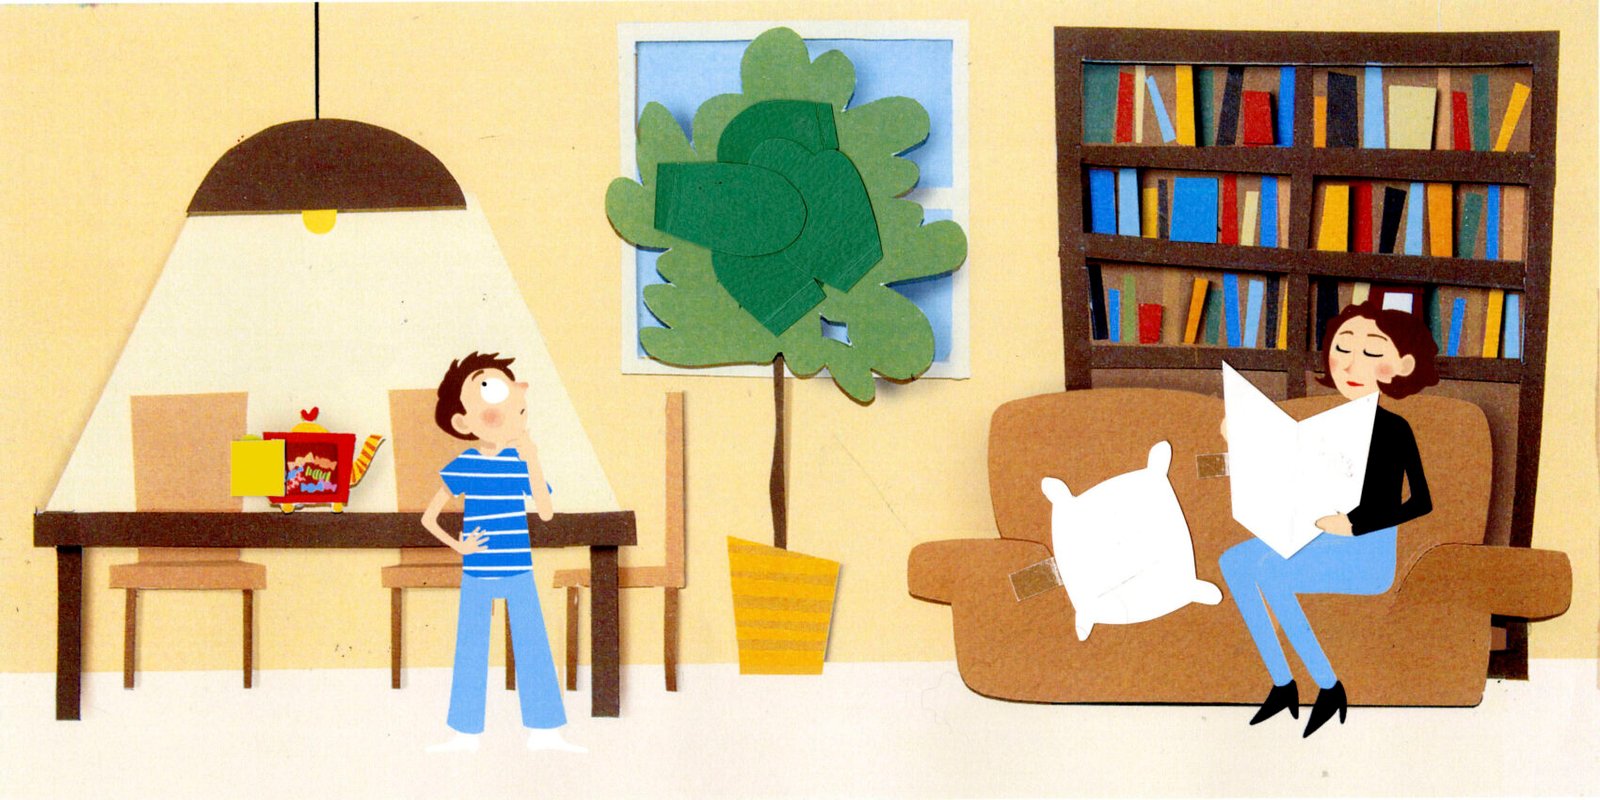 Illustration jeunesse : Billy cherche dans la salle. Valentine CHOQUET illustrations | illustratrice freelance